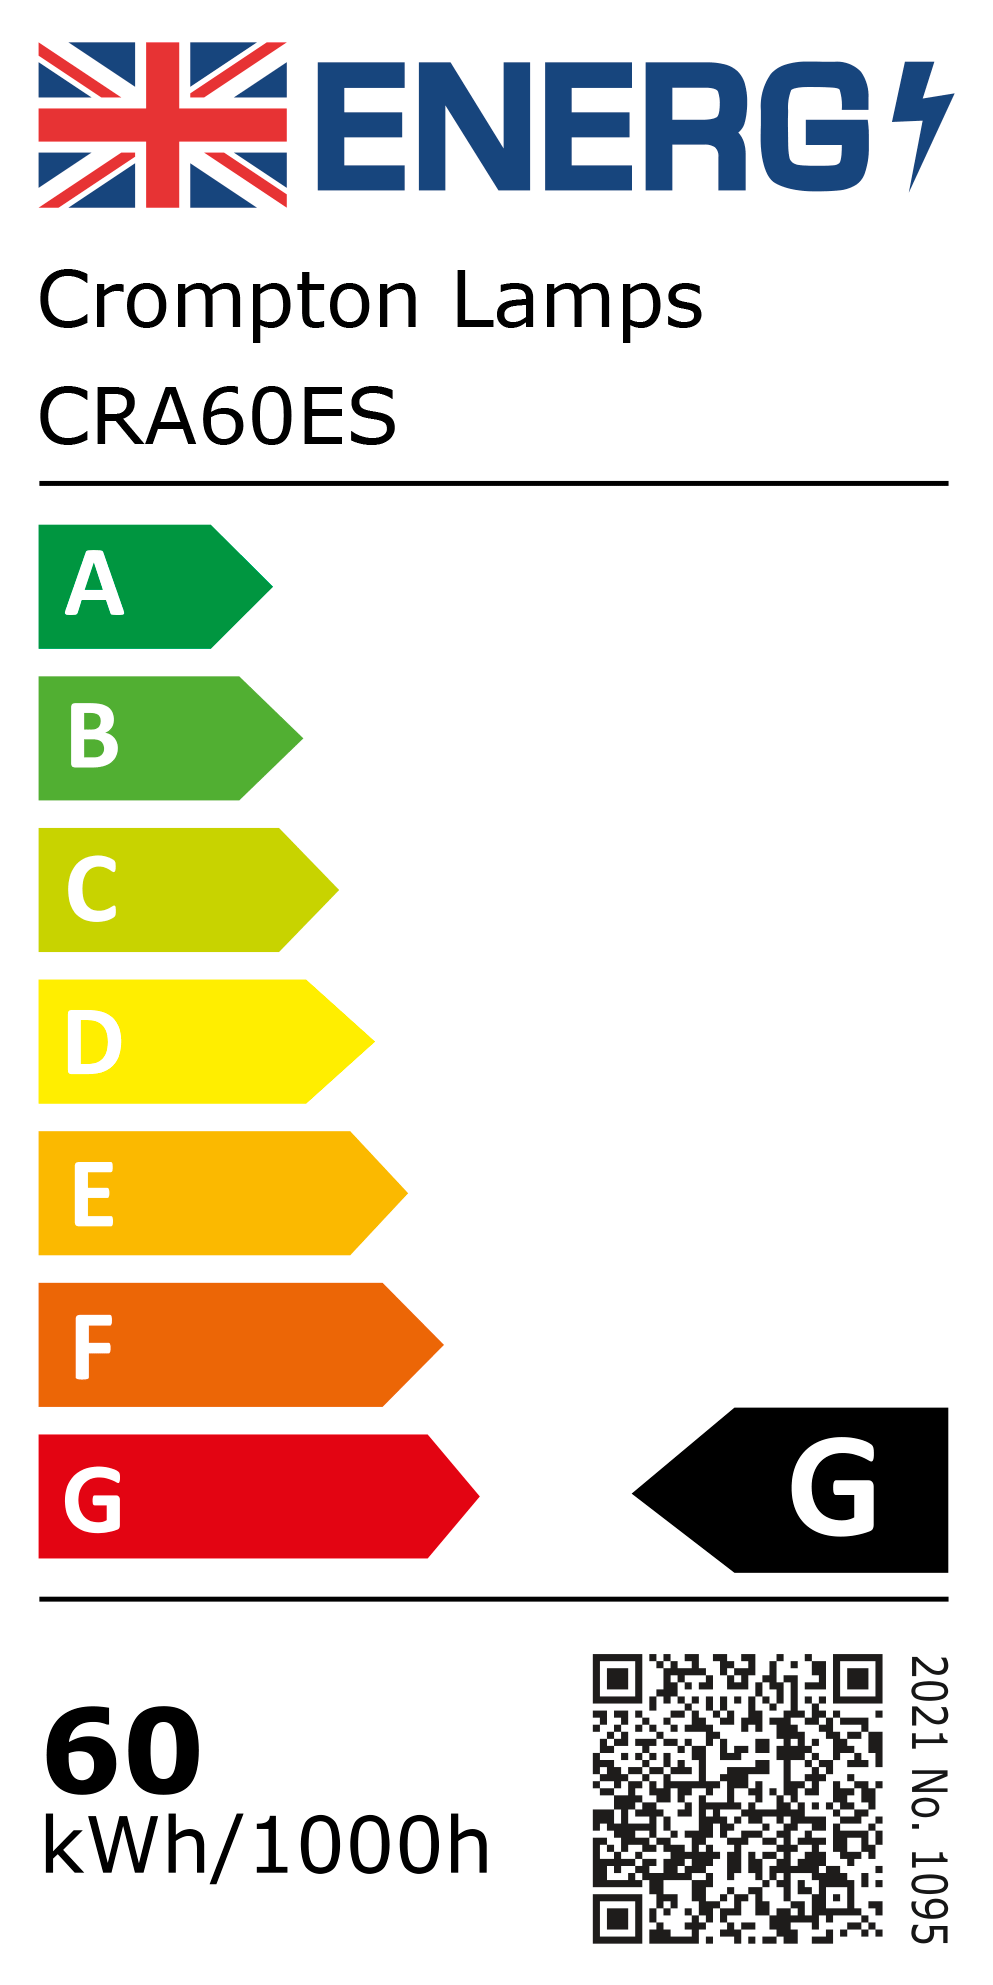 New 2021 Energy Rating Label: Stock Code CRA60ES